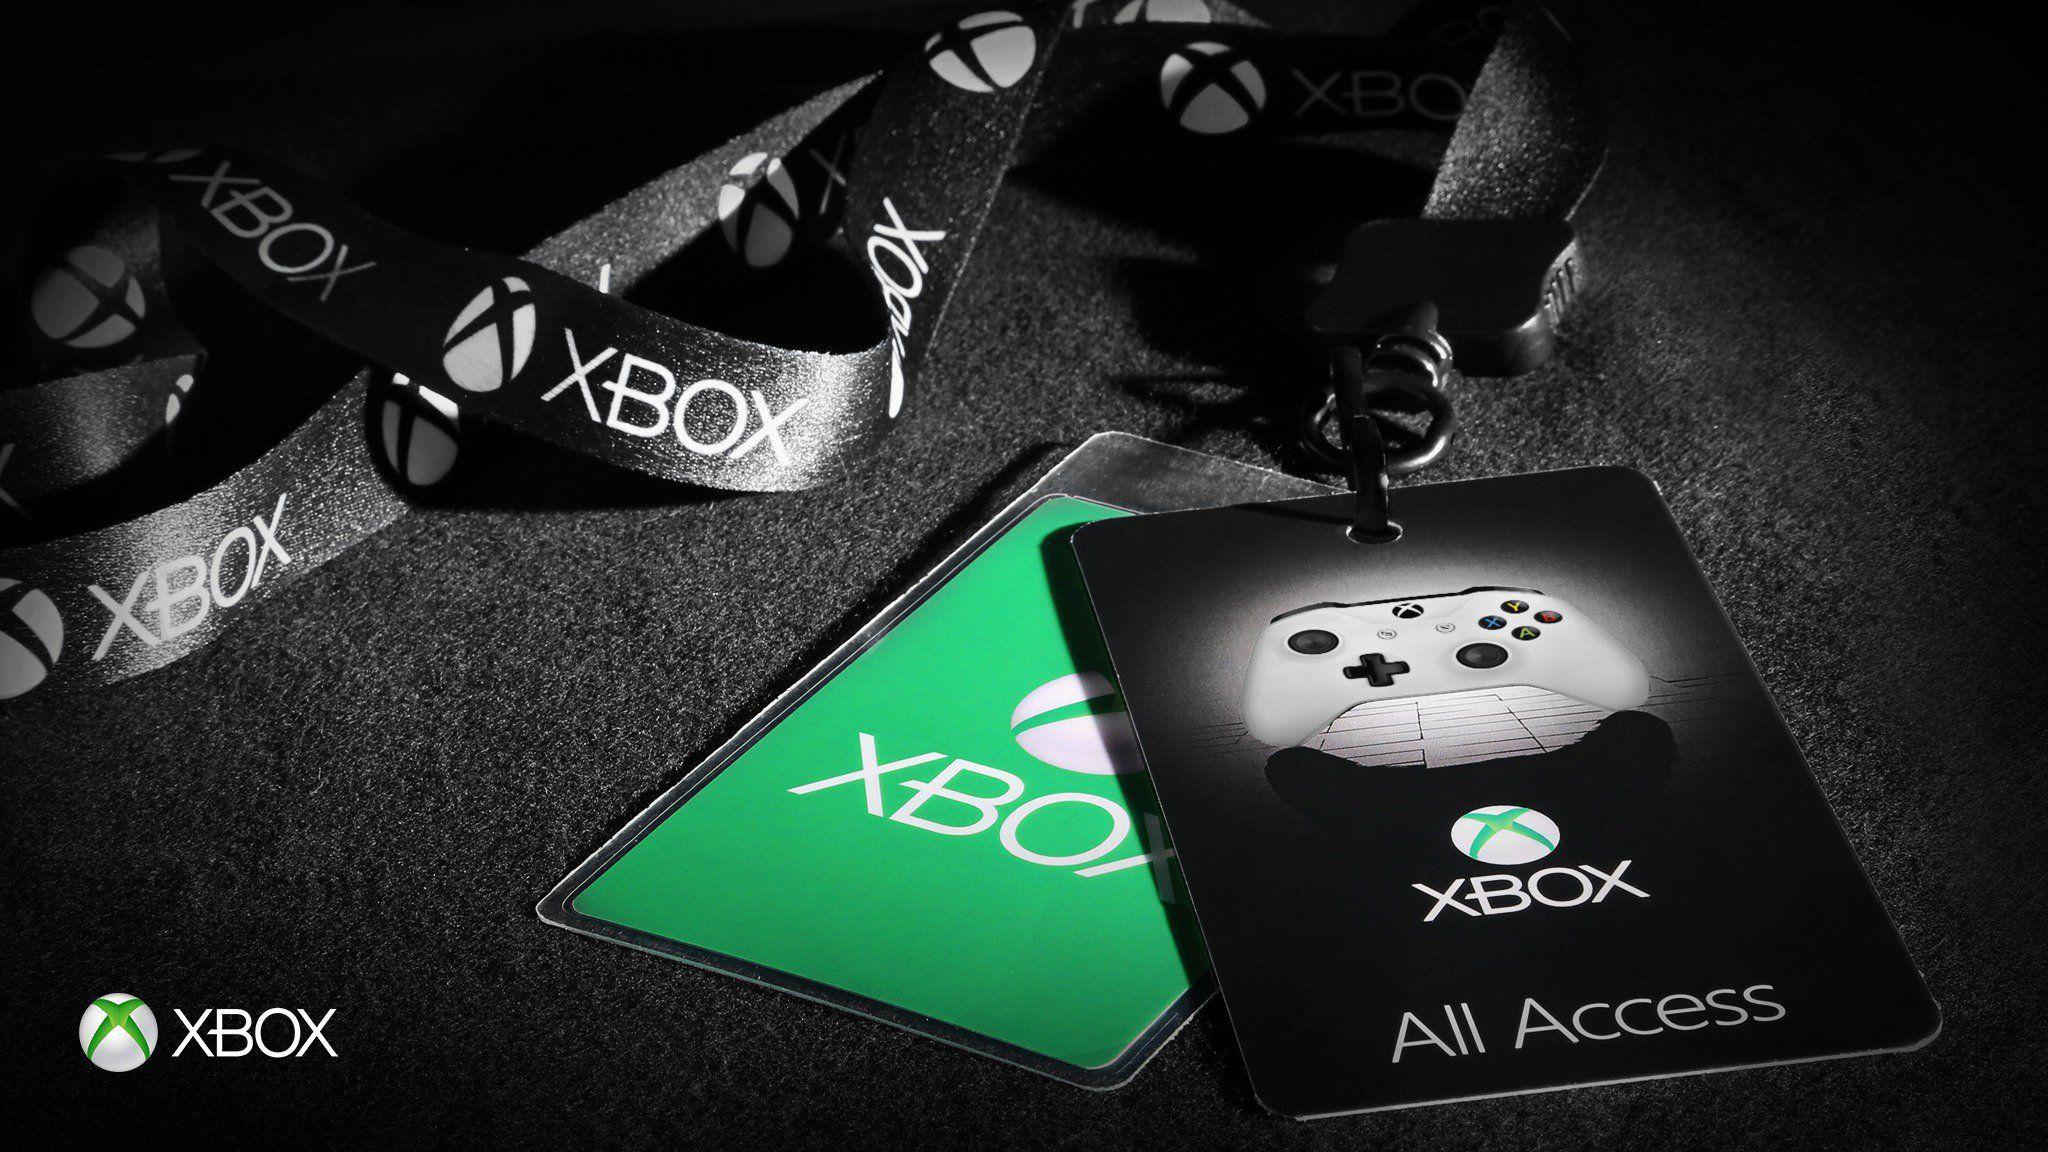 Microsoft's Xbox E3 2017: The Liveblog